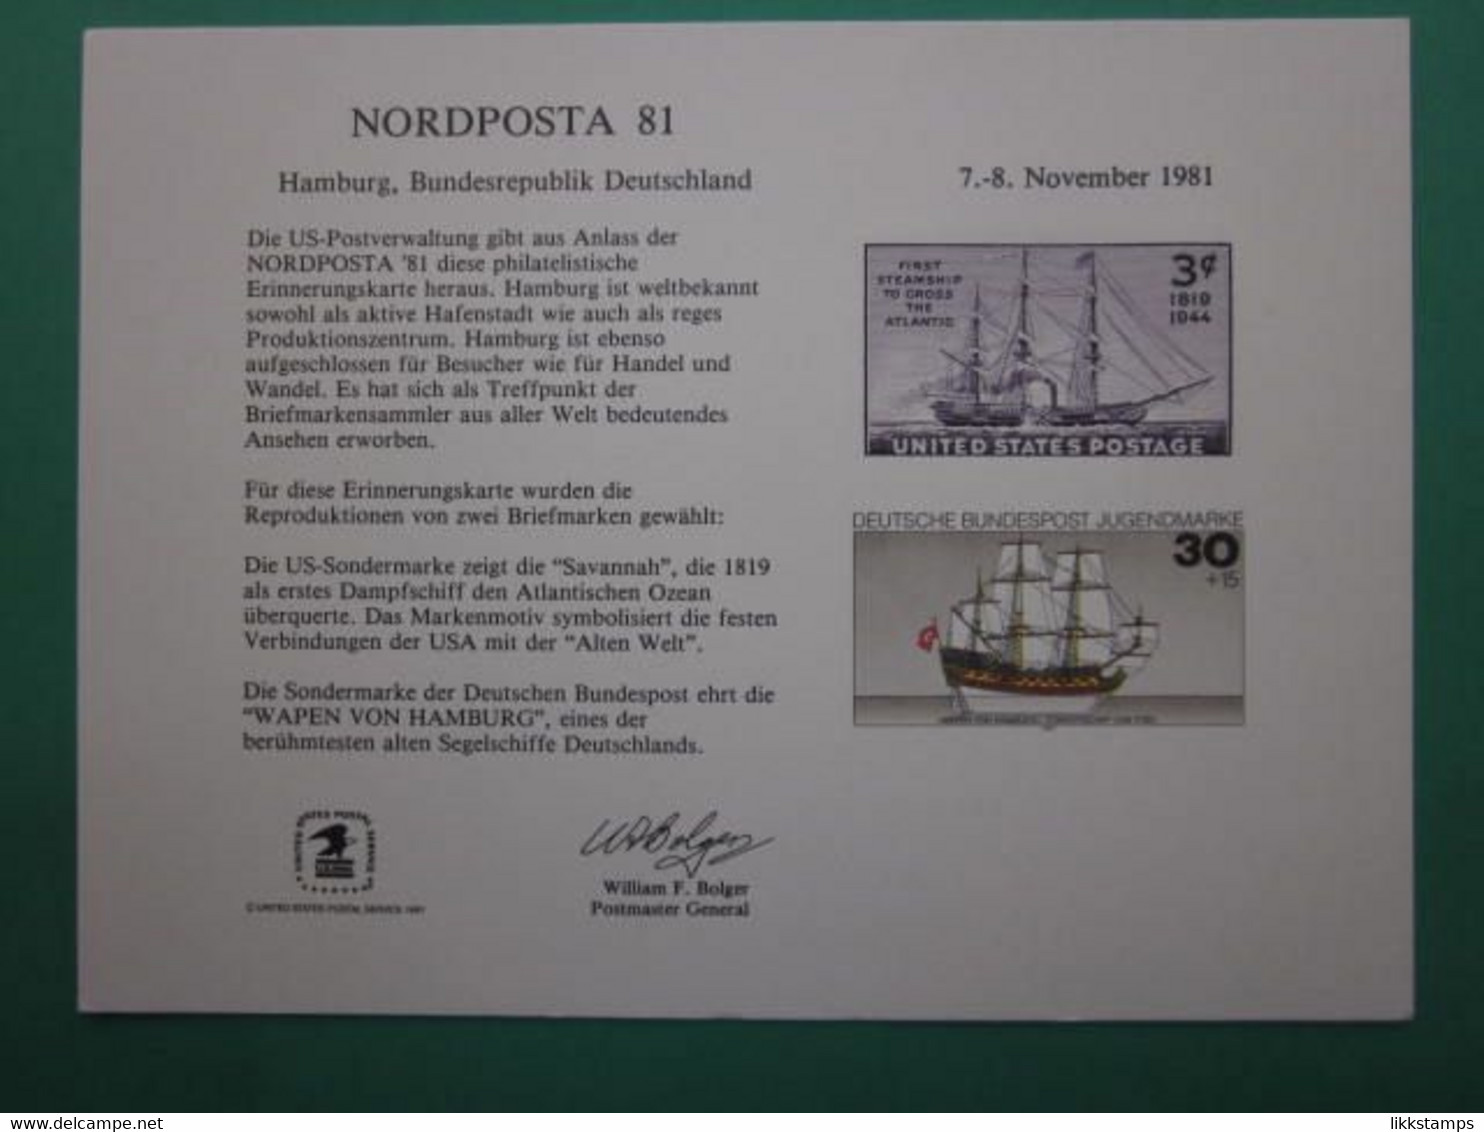 1981 A SOUVENIR CARD FOR NORDPOSTA 81, HAMBURG, GERMANY. ( 02188 ) - Cartoline Ricordo